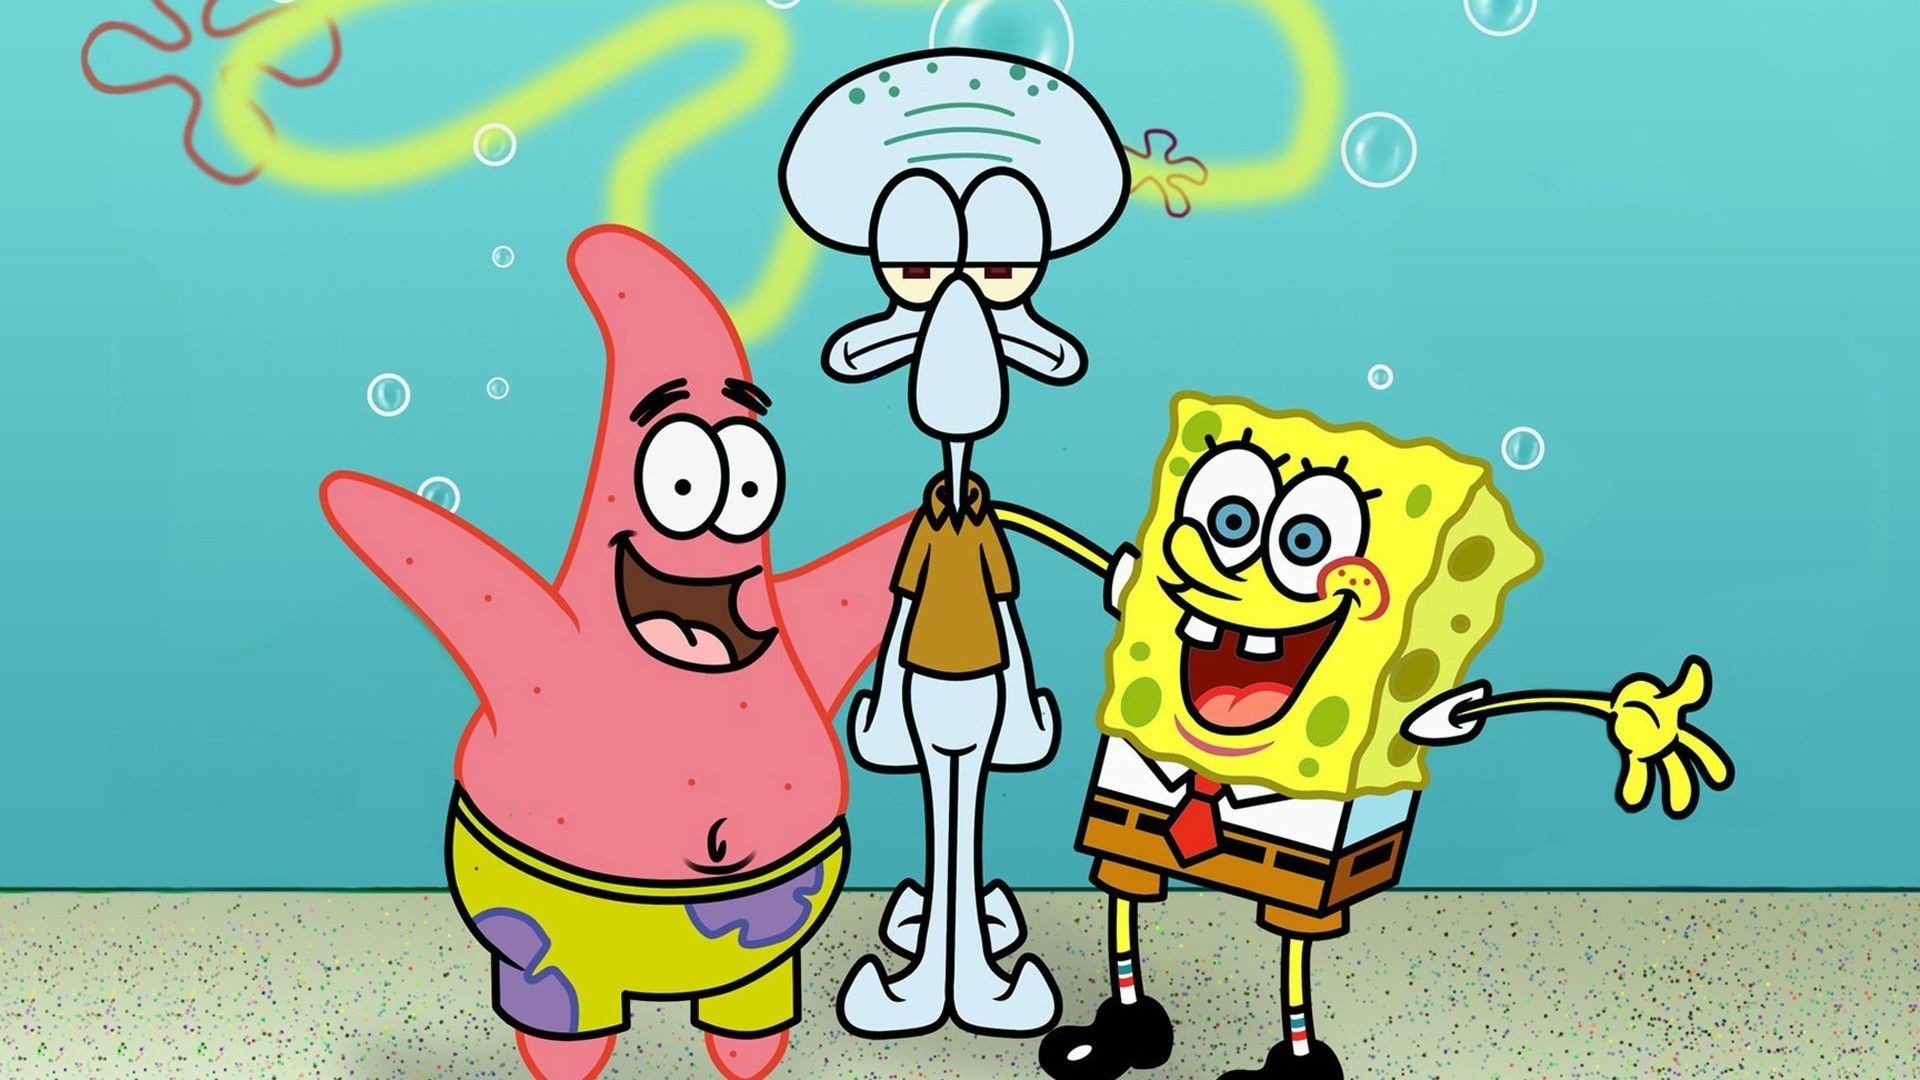 Patrick, Squidward, and SpongeBob are all smiling and waving at the camera. - SpongeBob